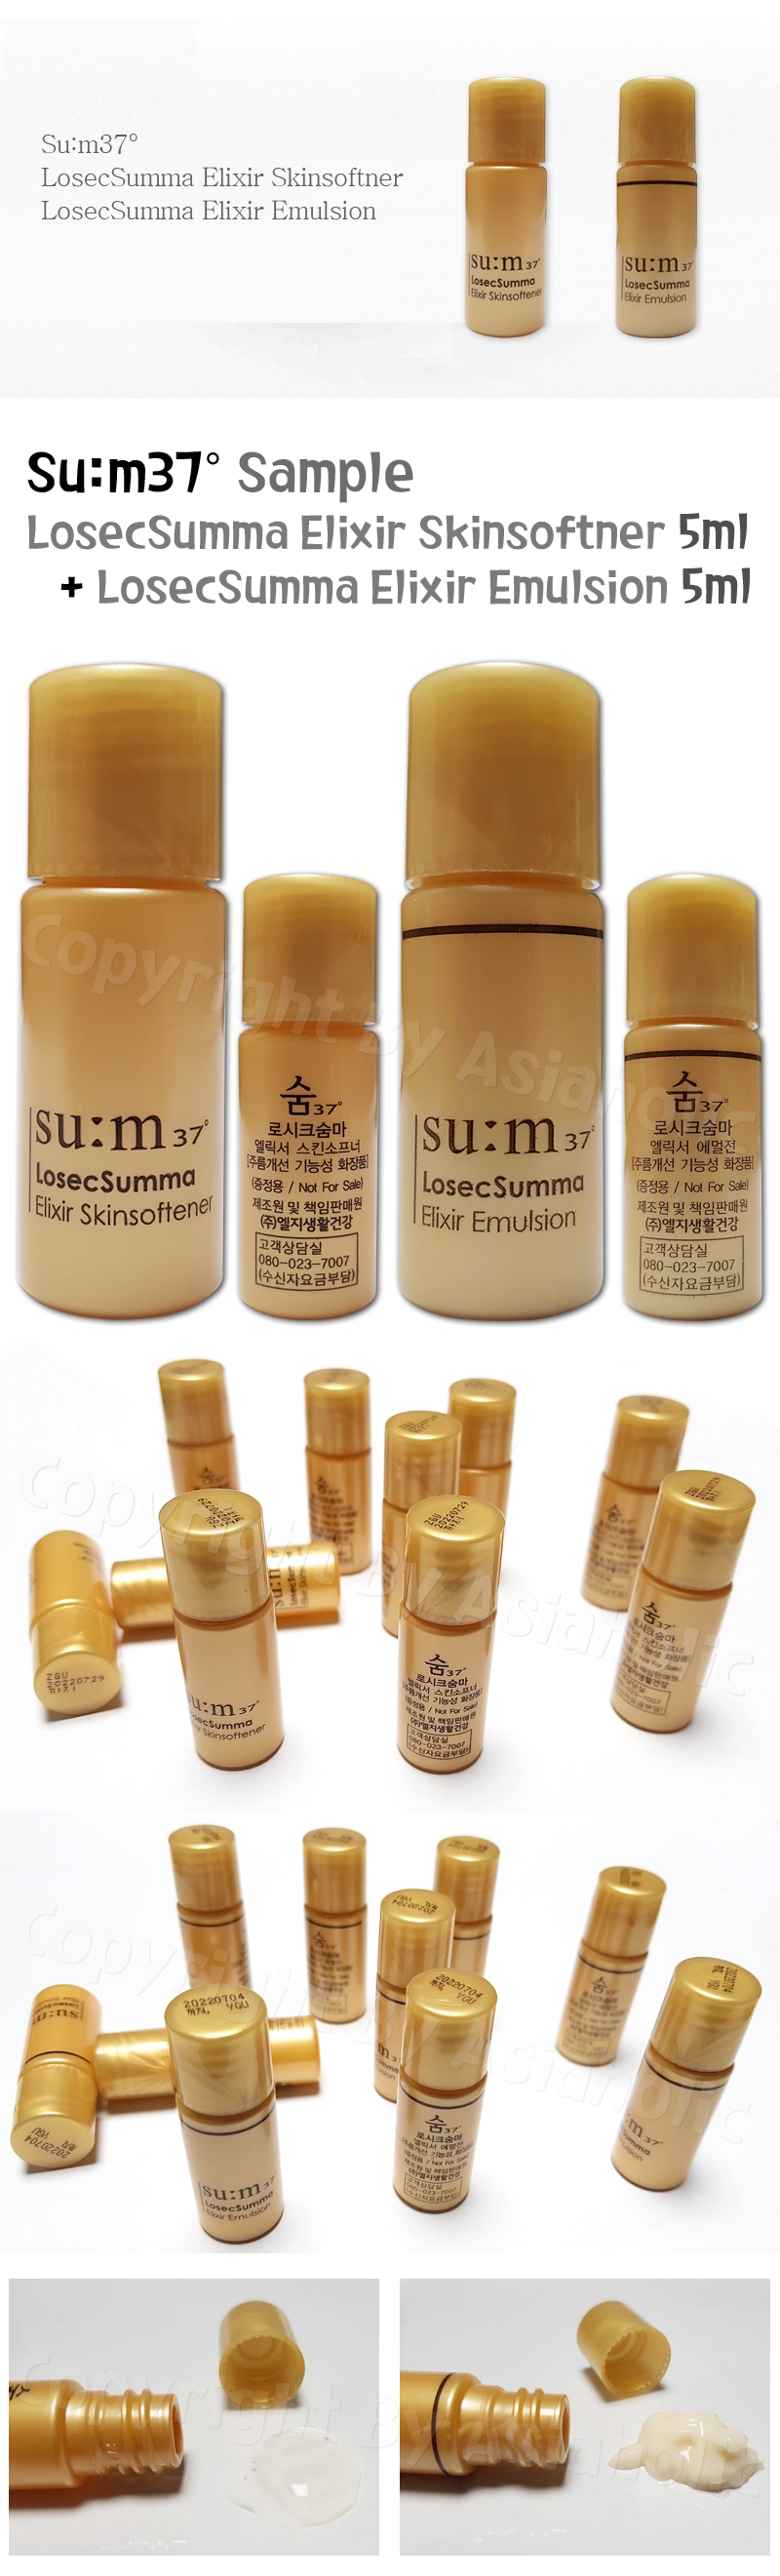 SU:M37 LosecSumma Elixir 5ml Skinsoftner + Emulsion (8pcs ~ 90pcs) Sum37 Newest Version